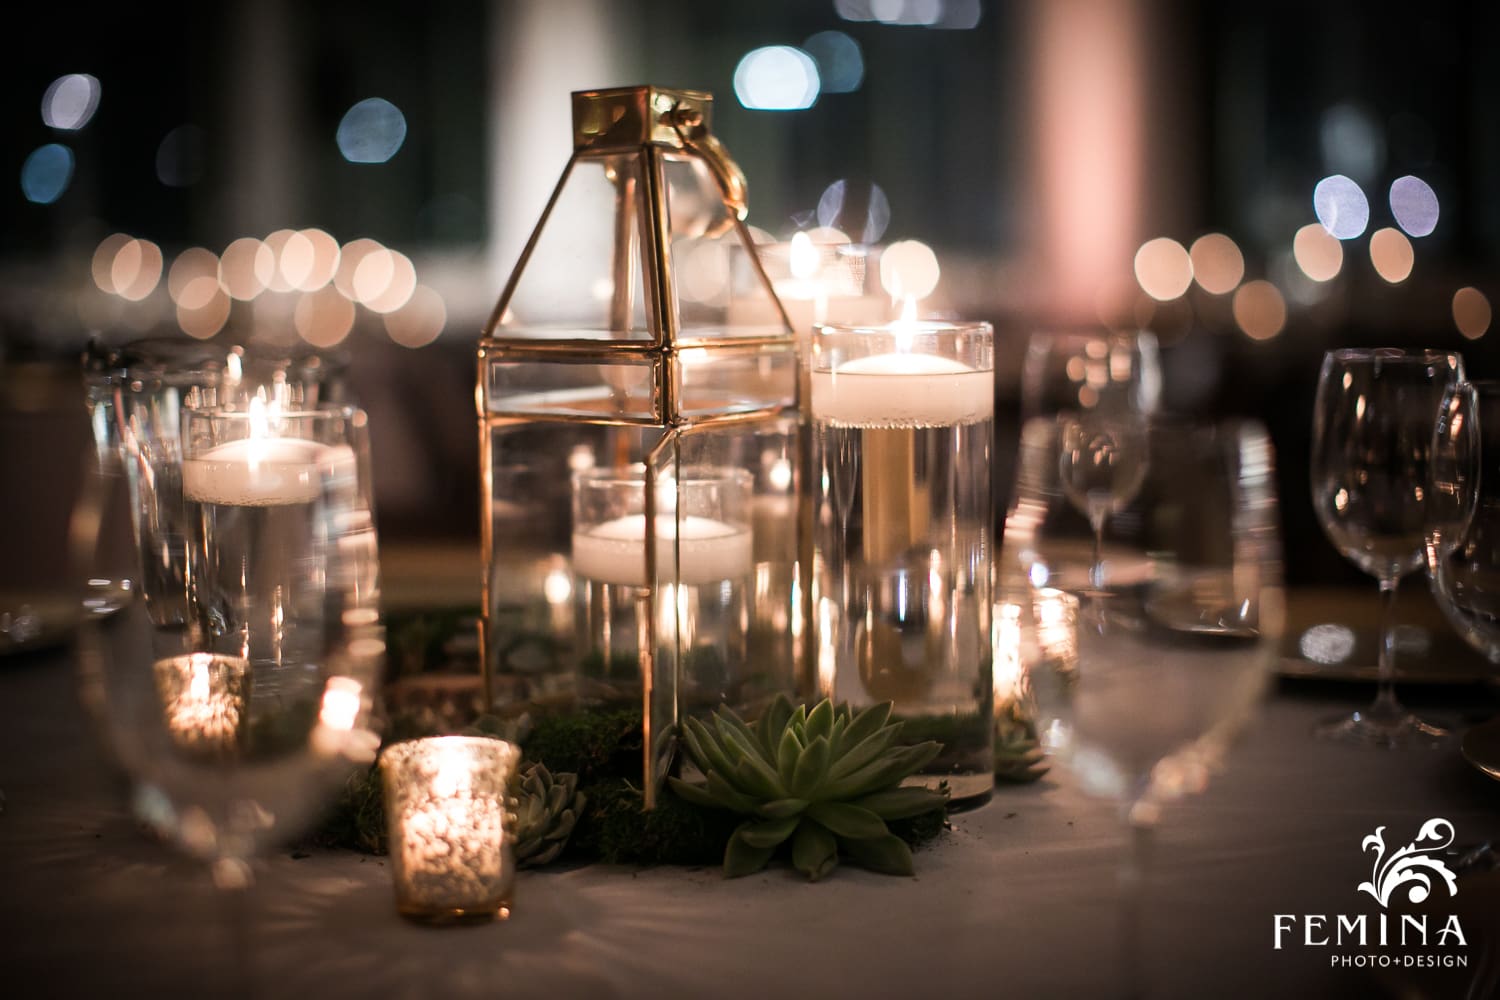 candle lantern decor at wedding reception